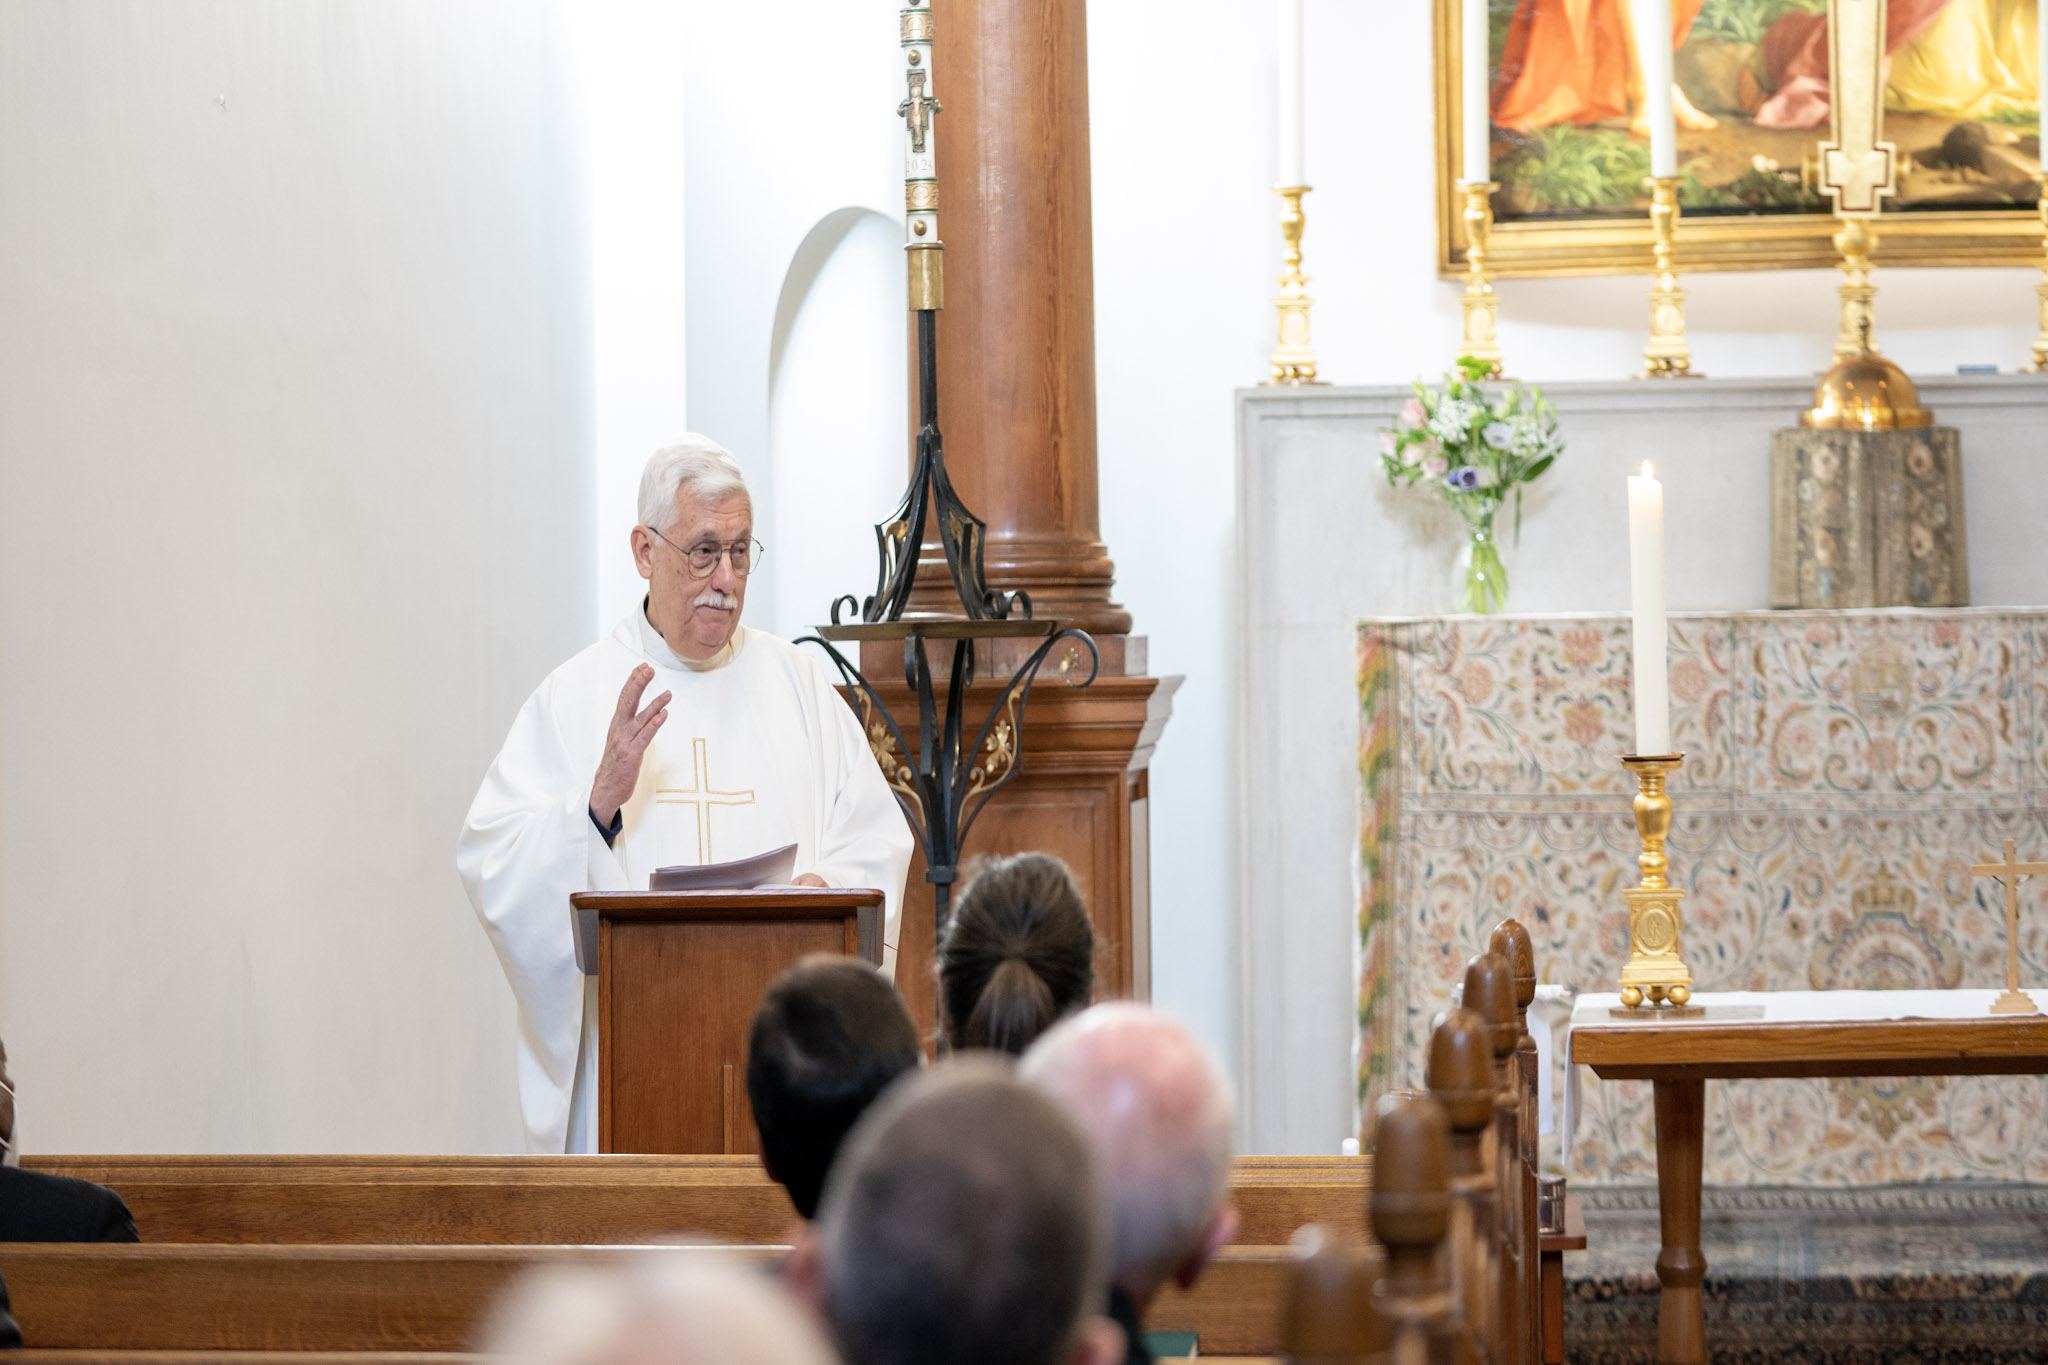 Fr General presiding Mass